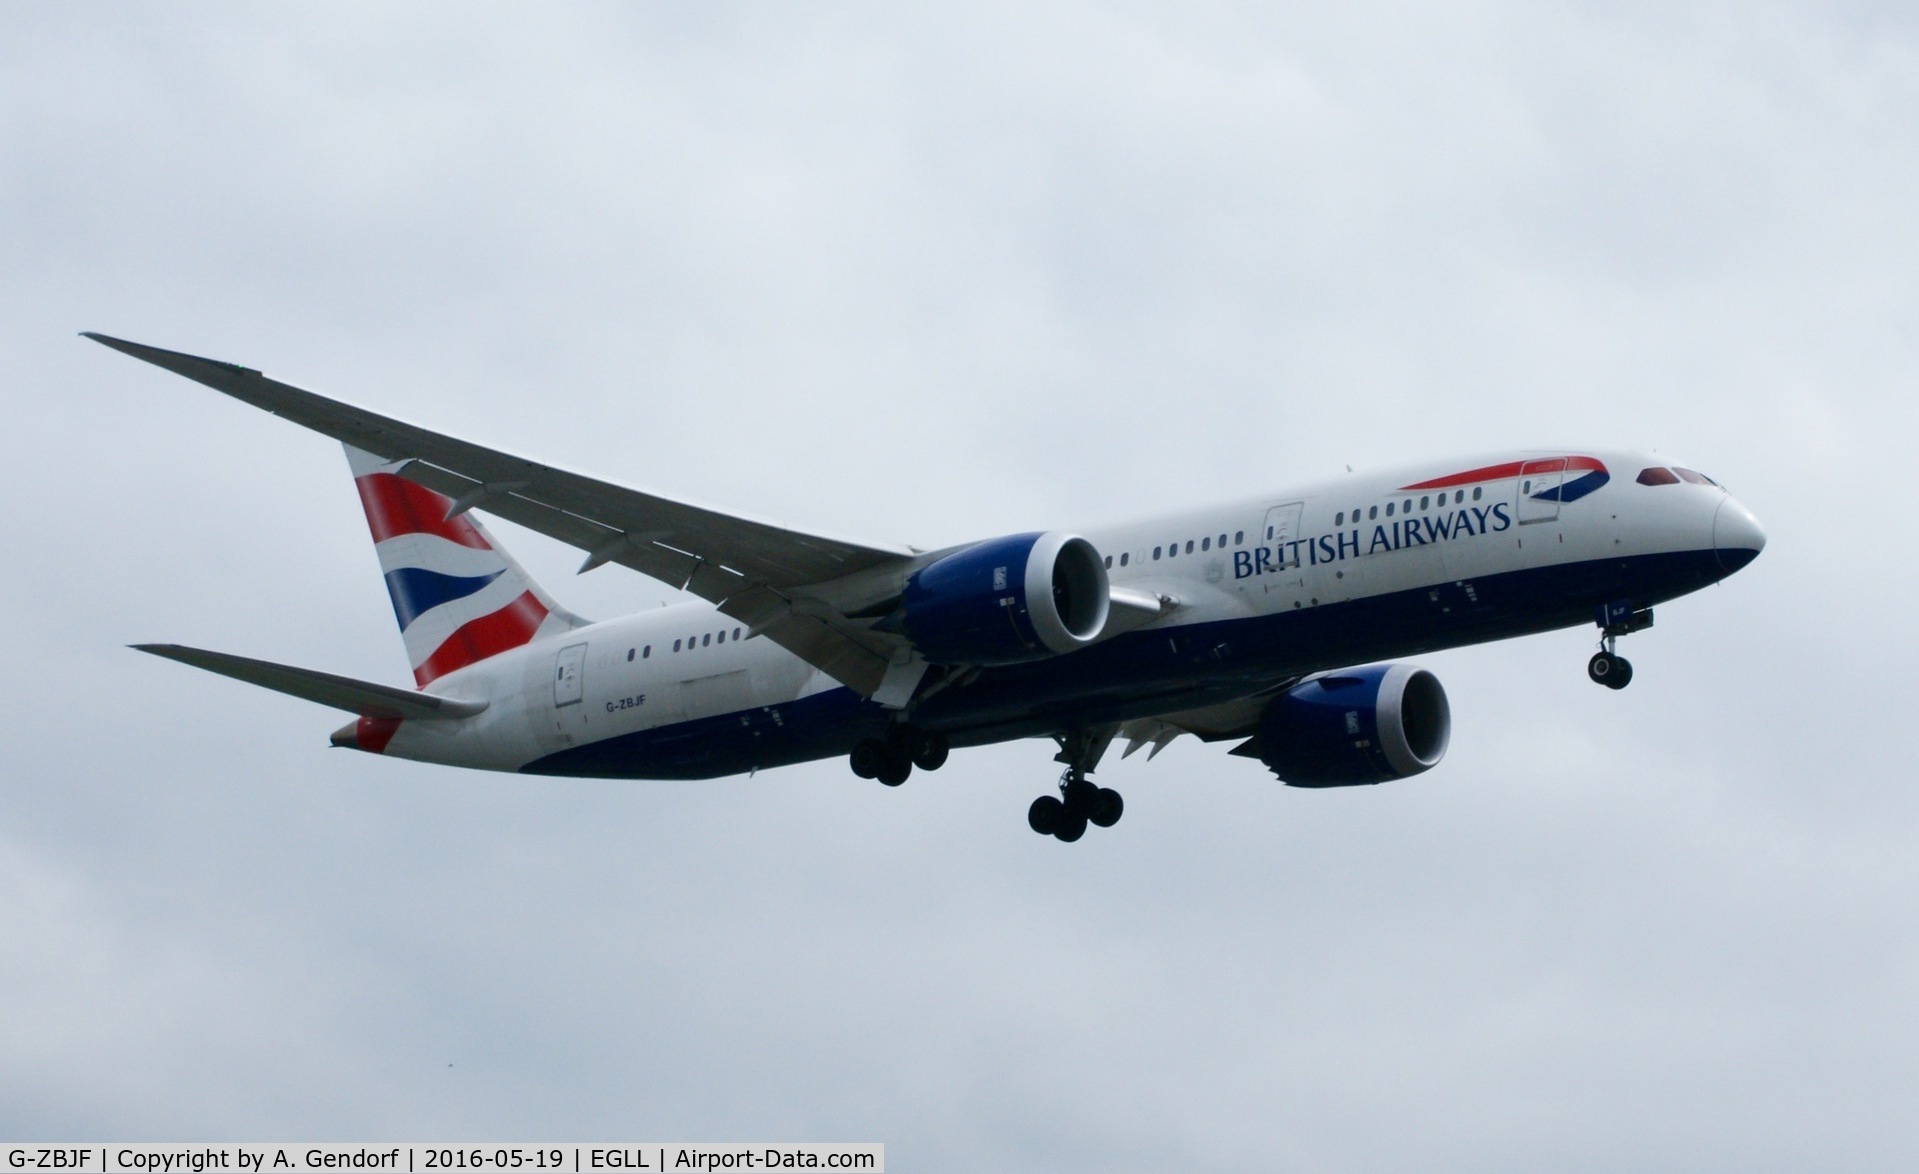 G-ZBJF, 2013 Boeing 787-8 Dreamliner C/N 38613, British Airways, is here on finals at London Heathrow(EGLL)